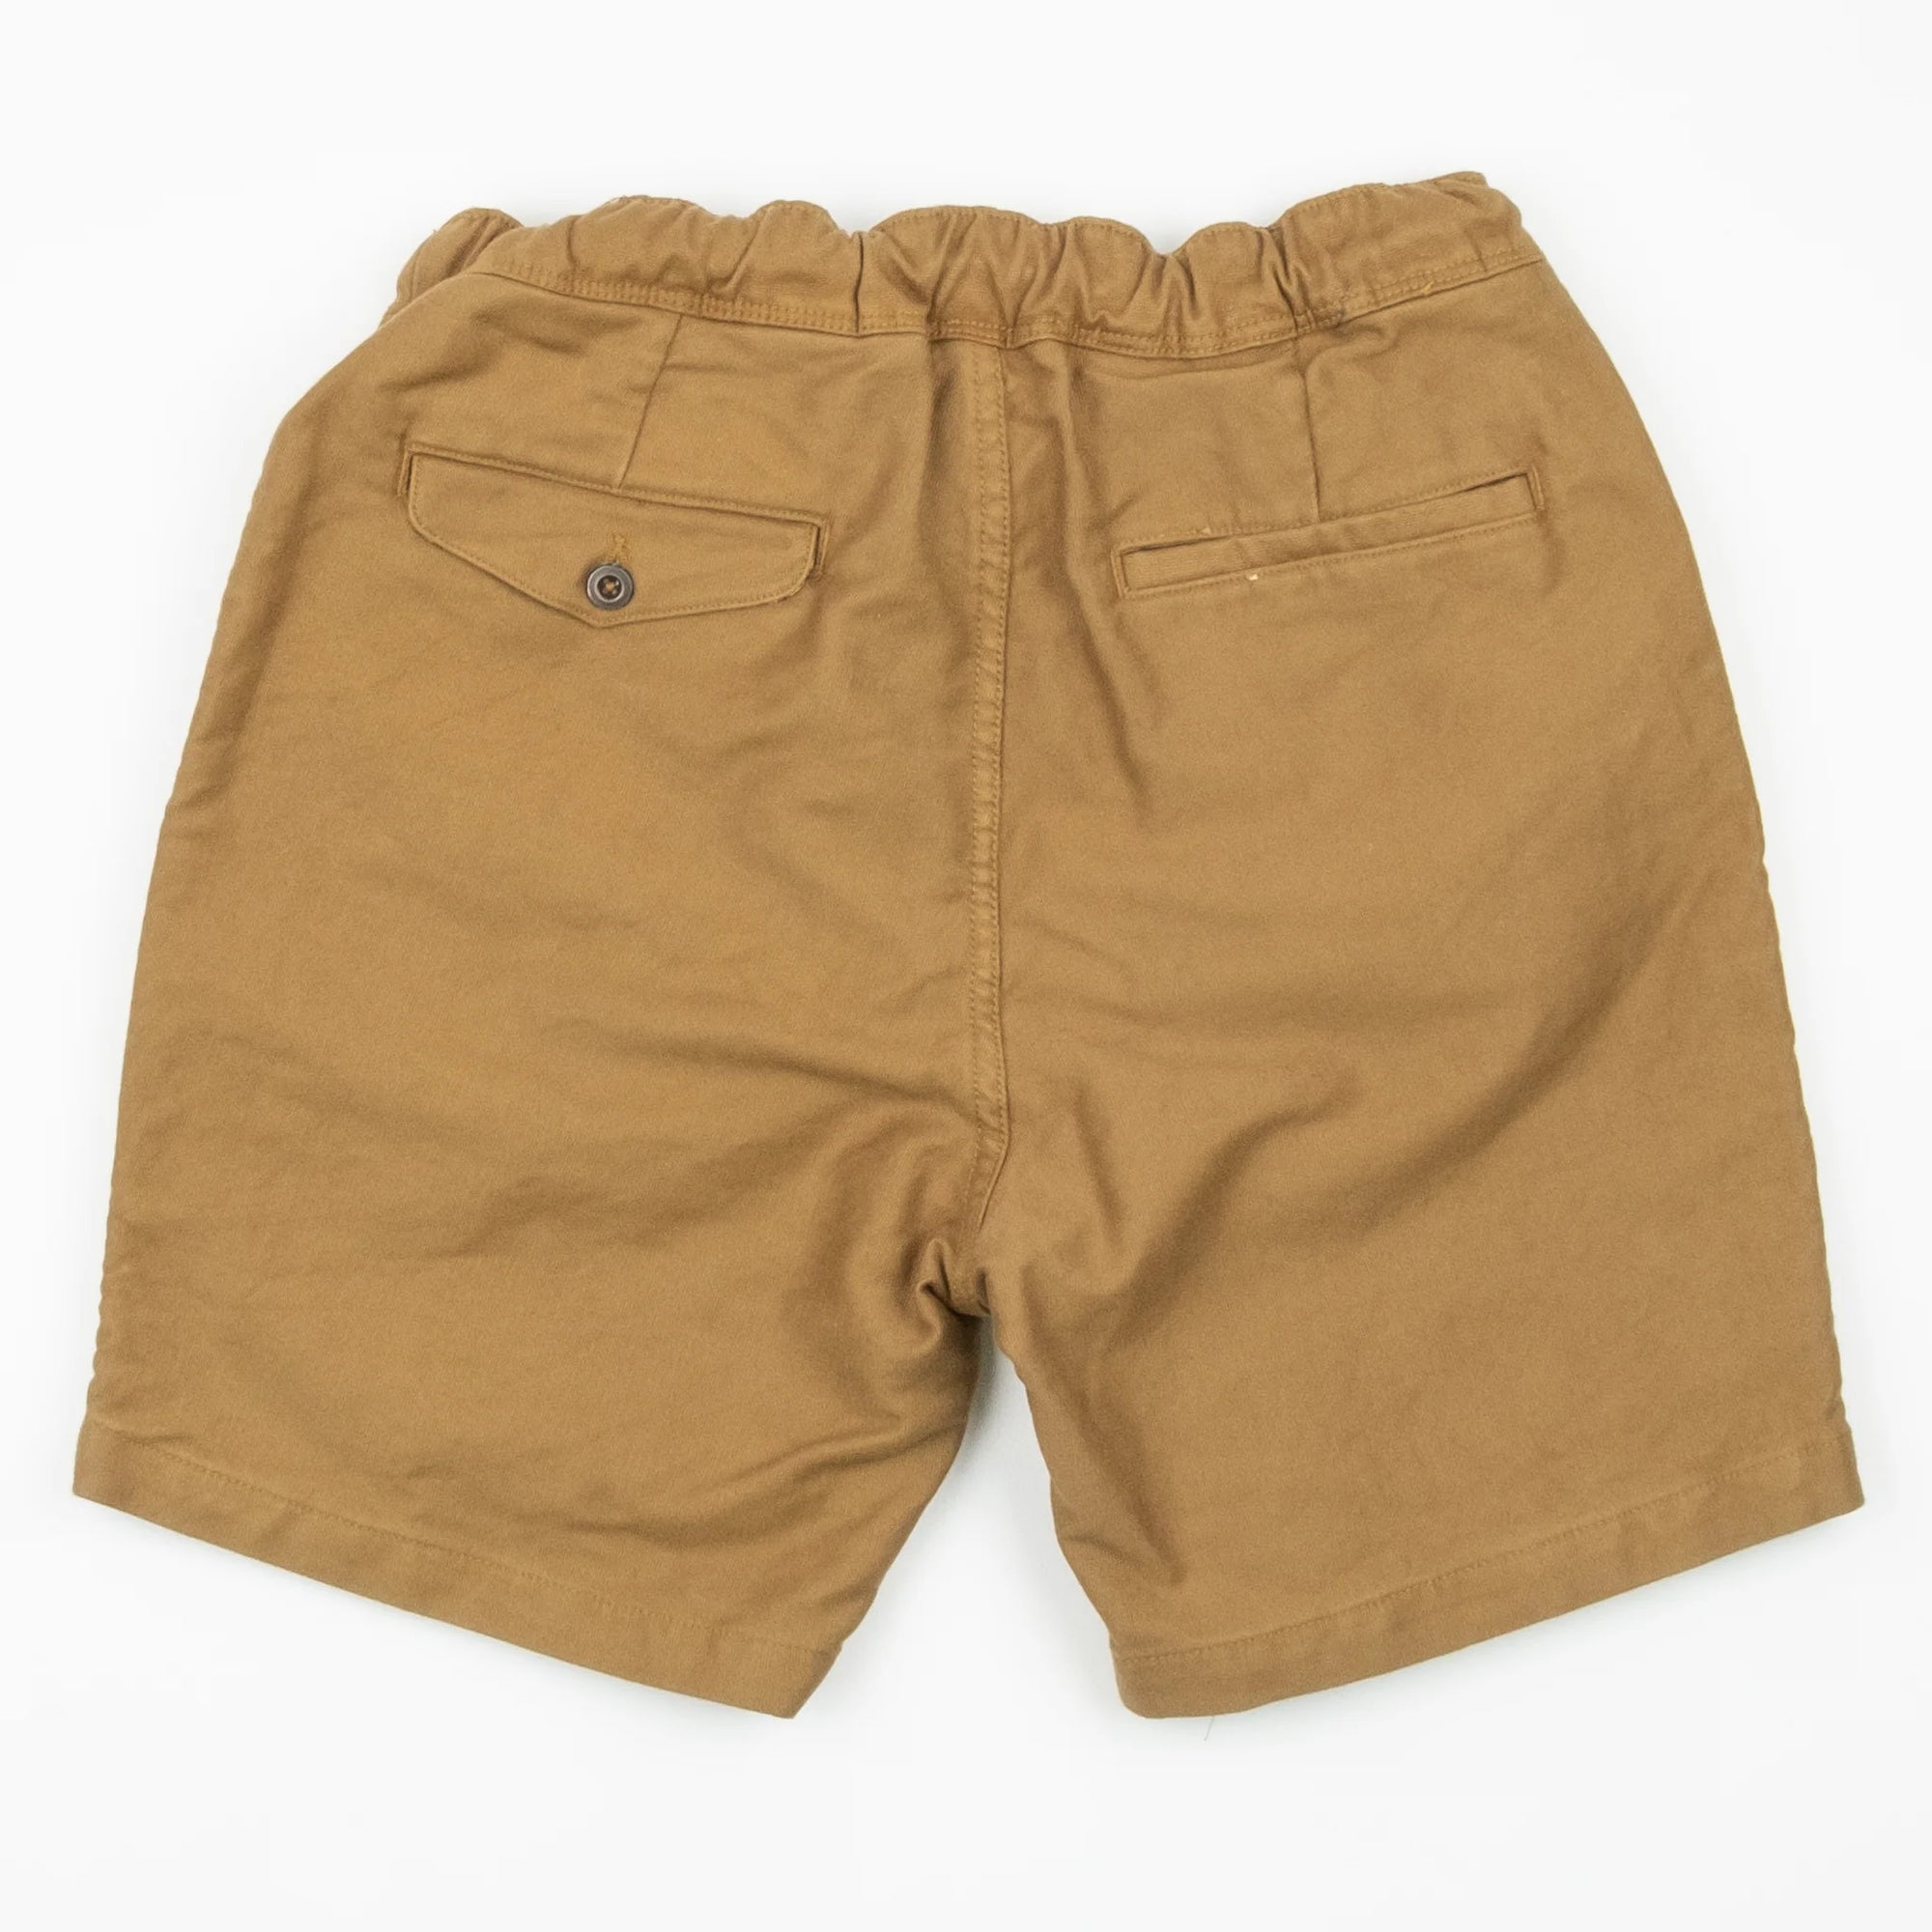 Freenote Cloth Premium Deck Shorts - Gold